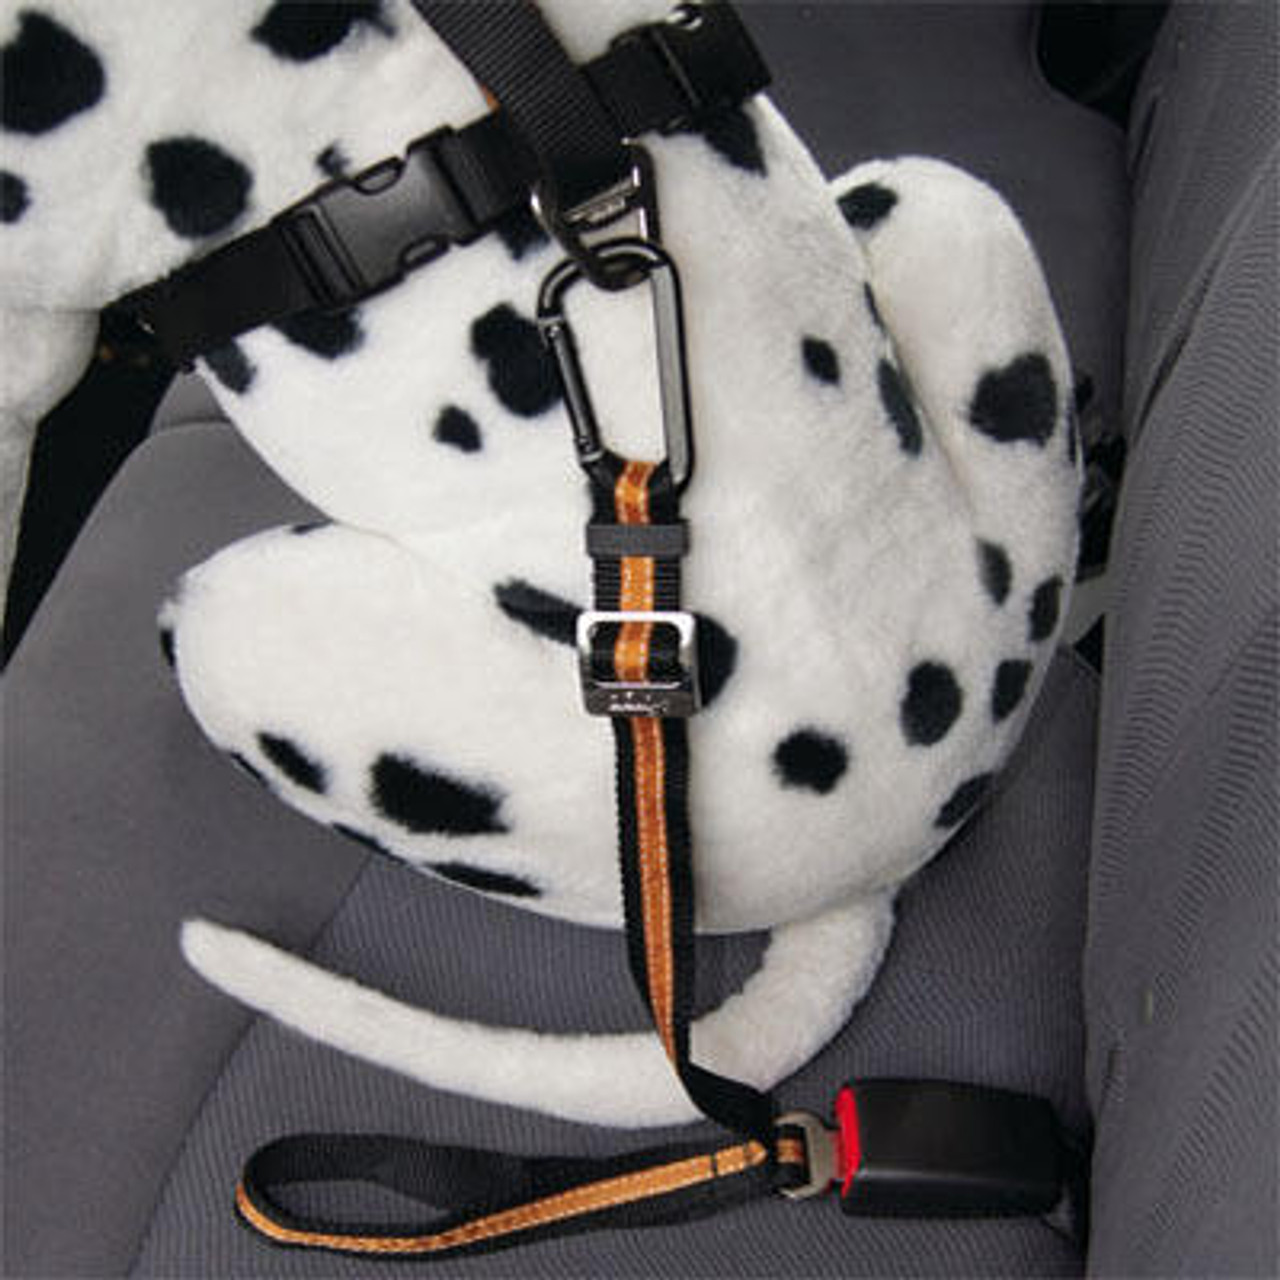 Dog Seatbelt  Kurgo Direct to Seat Belt Tether